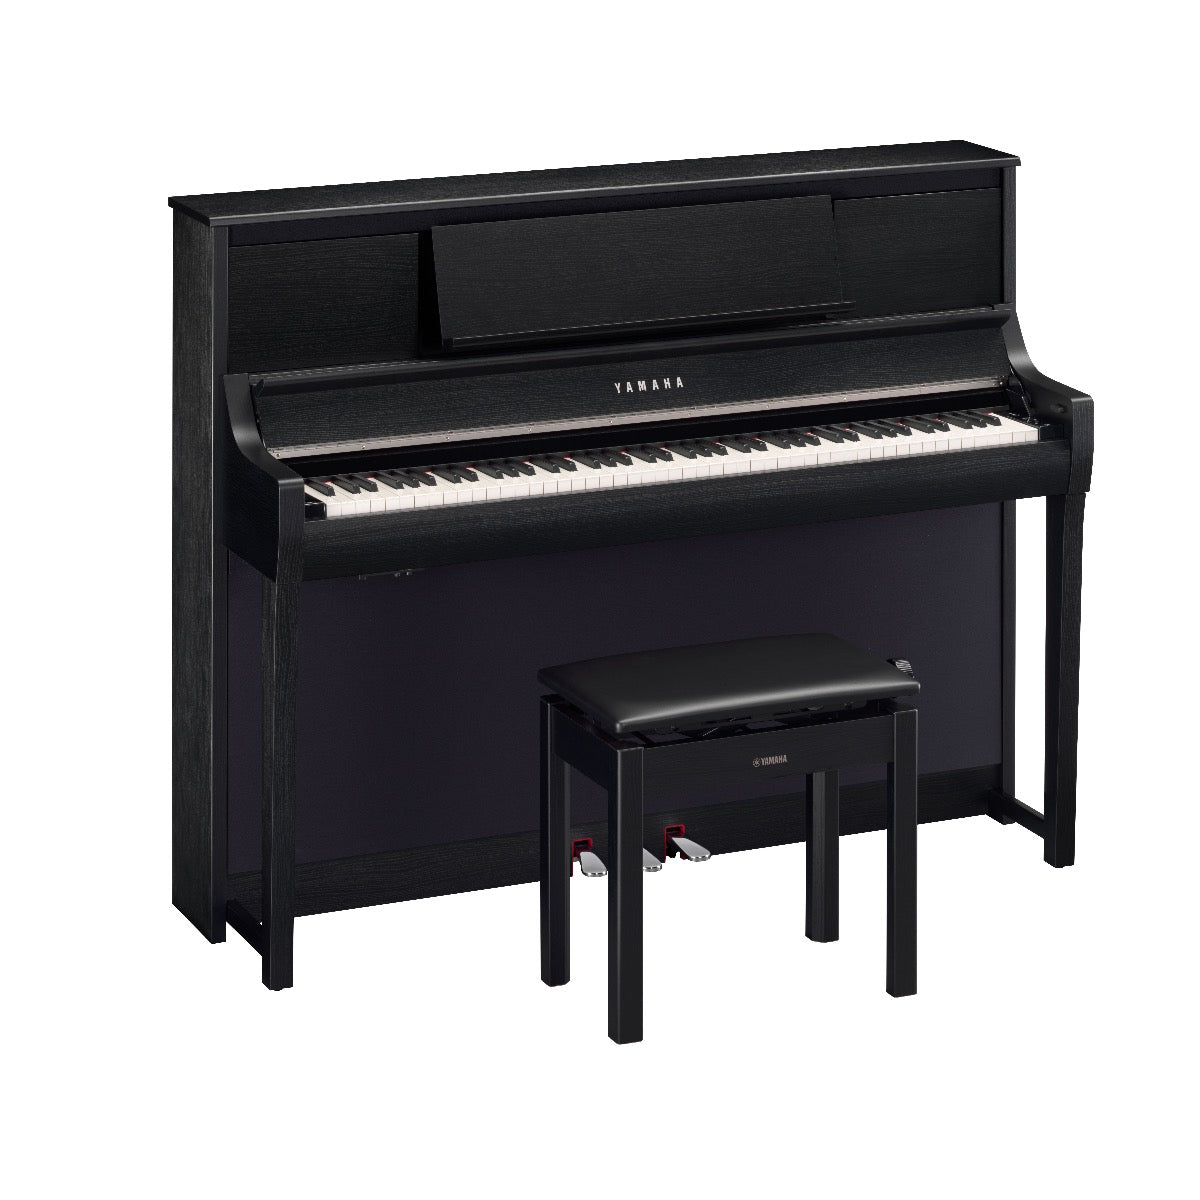 Yamaha Clavinova CSP295B Digital Piano with Bench - Black Walnut, View 1